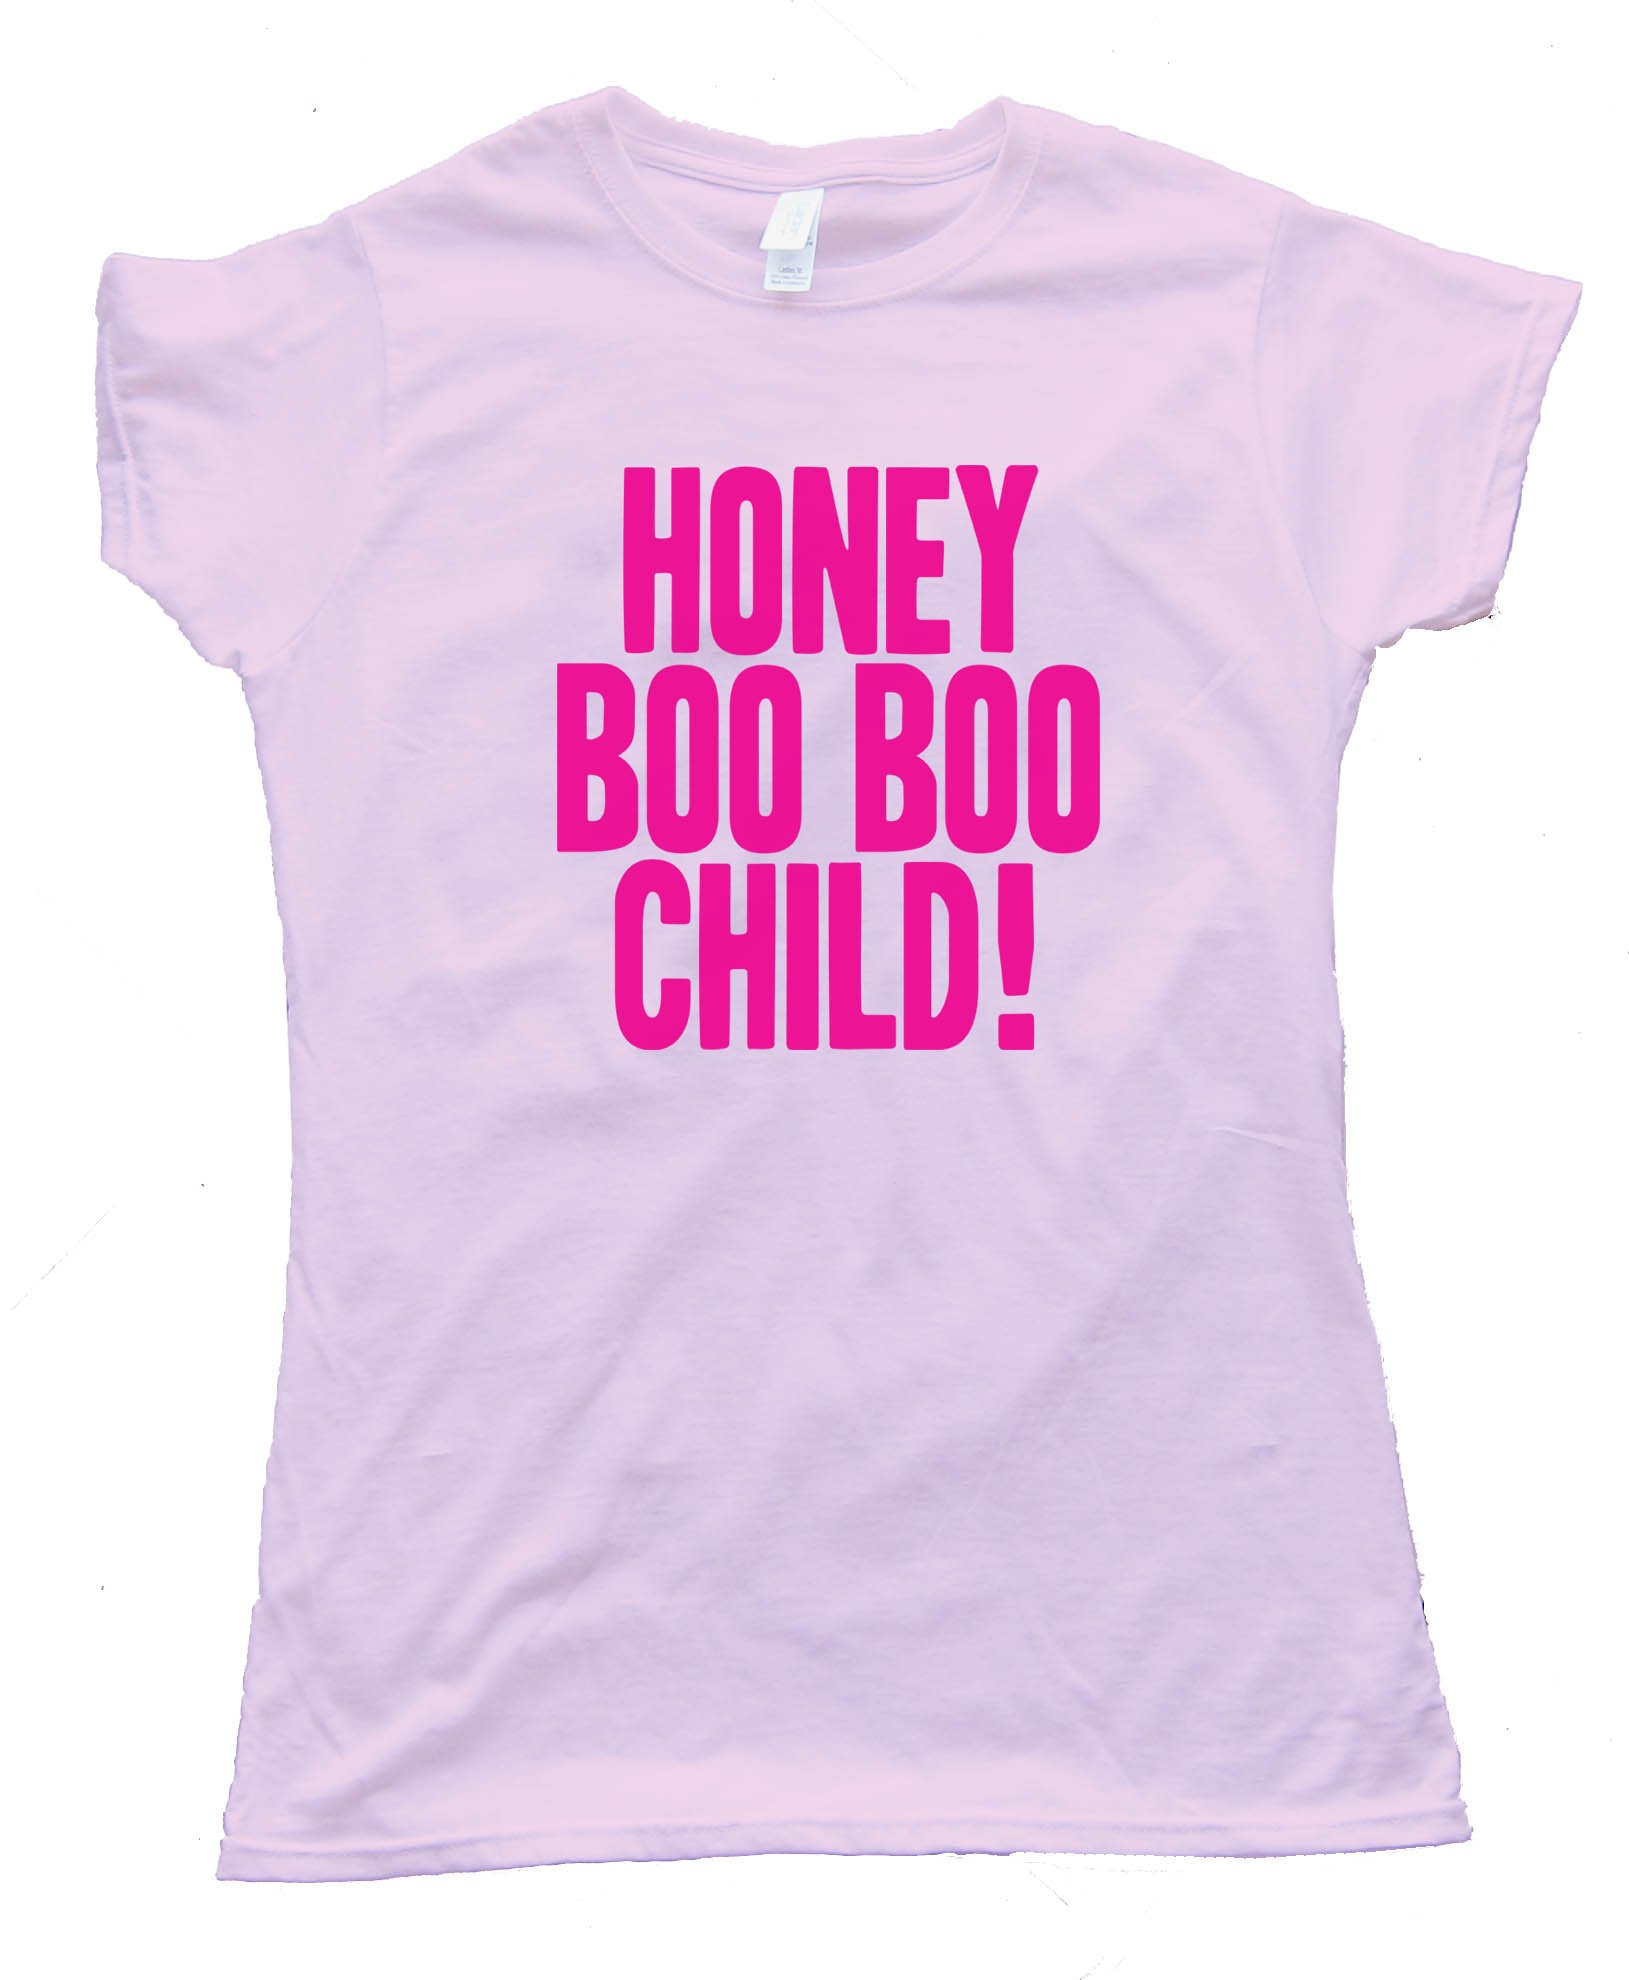 Womens Big & Loud Honey Boo Boo Child - Tee Shirt